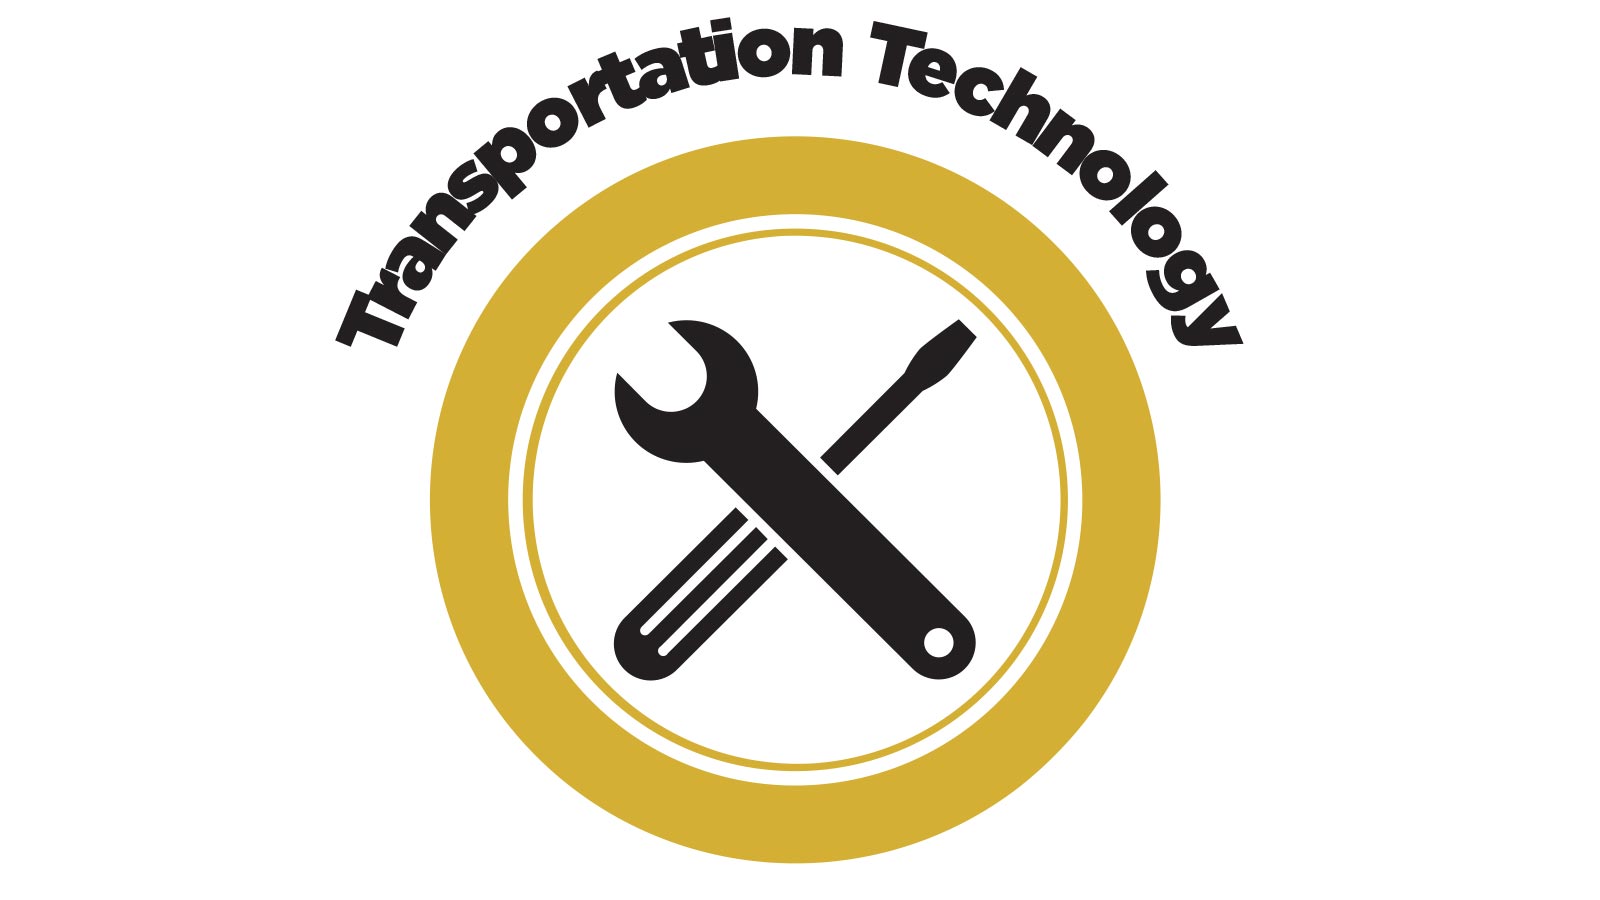 Transportation Technology RTC logo